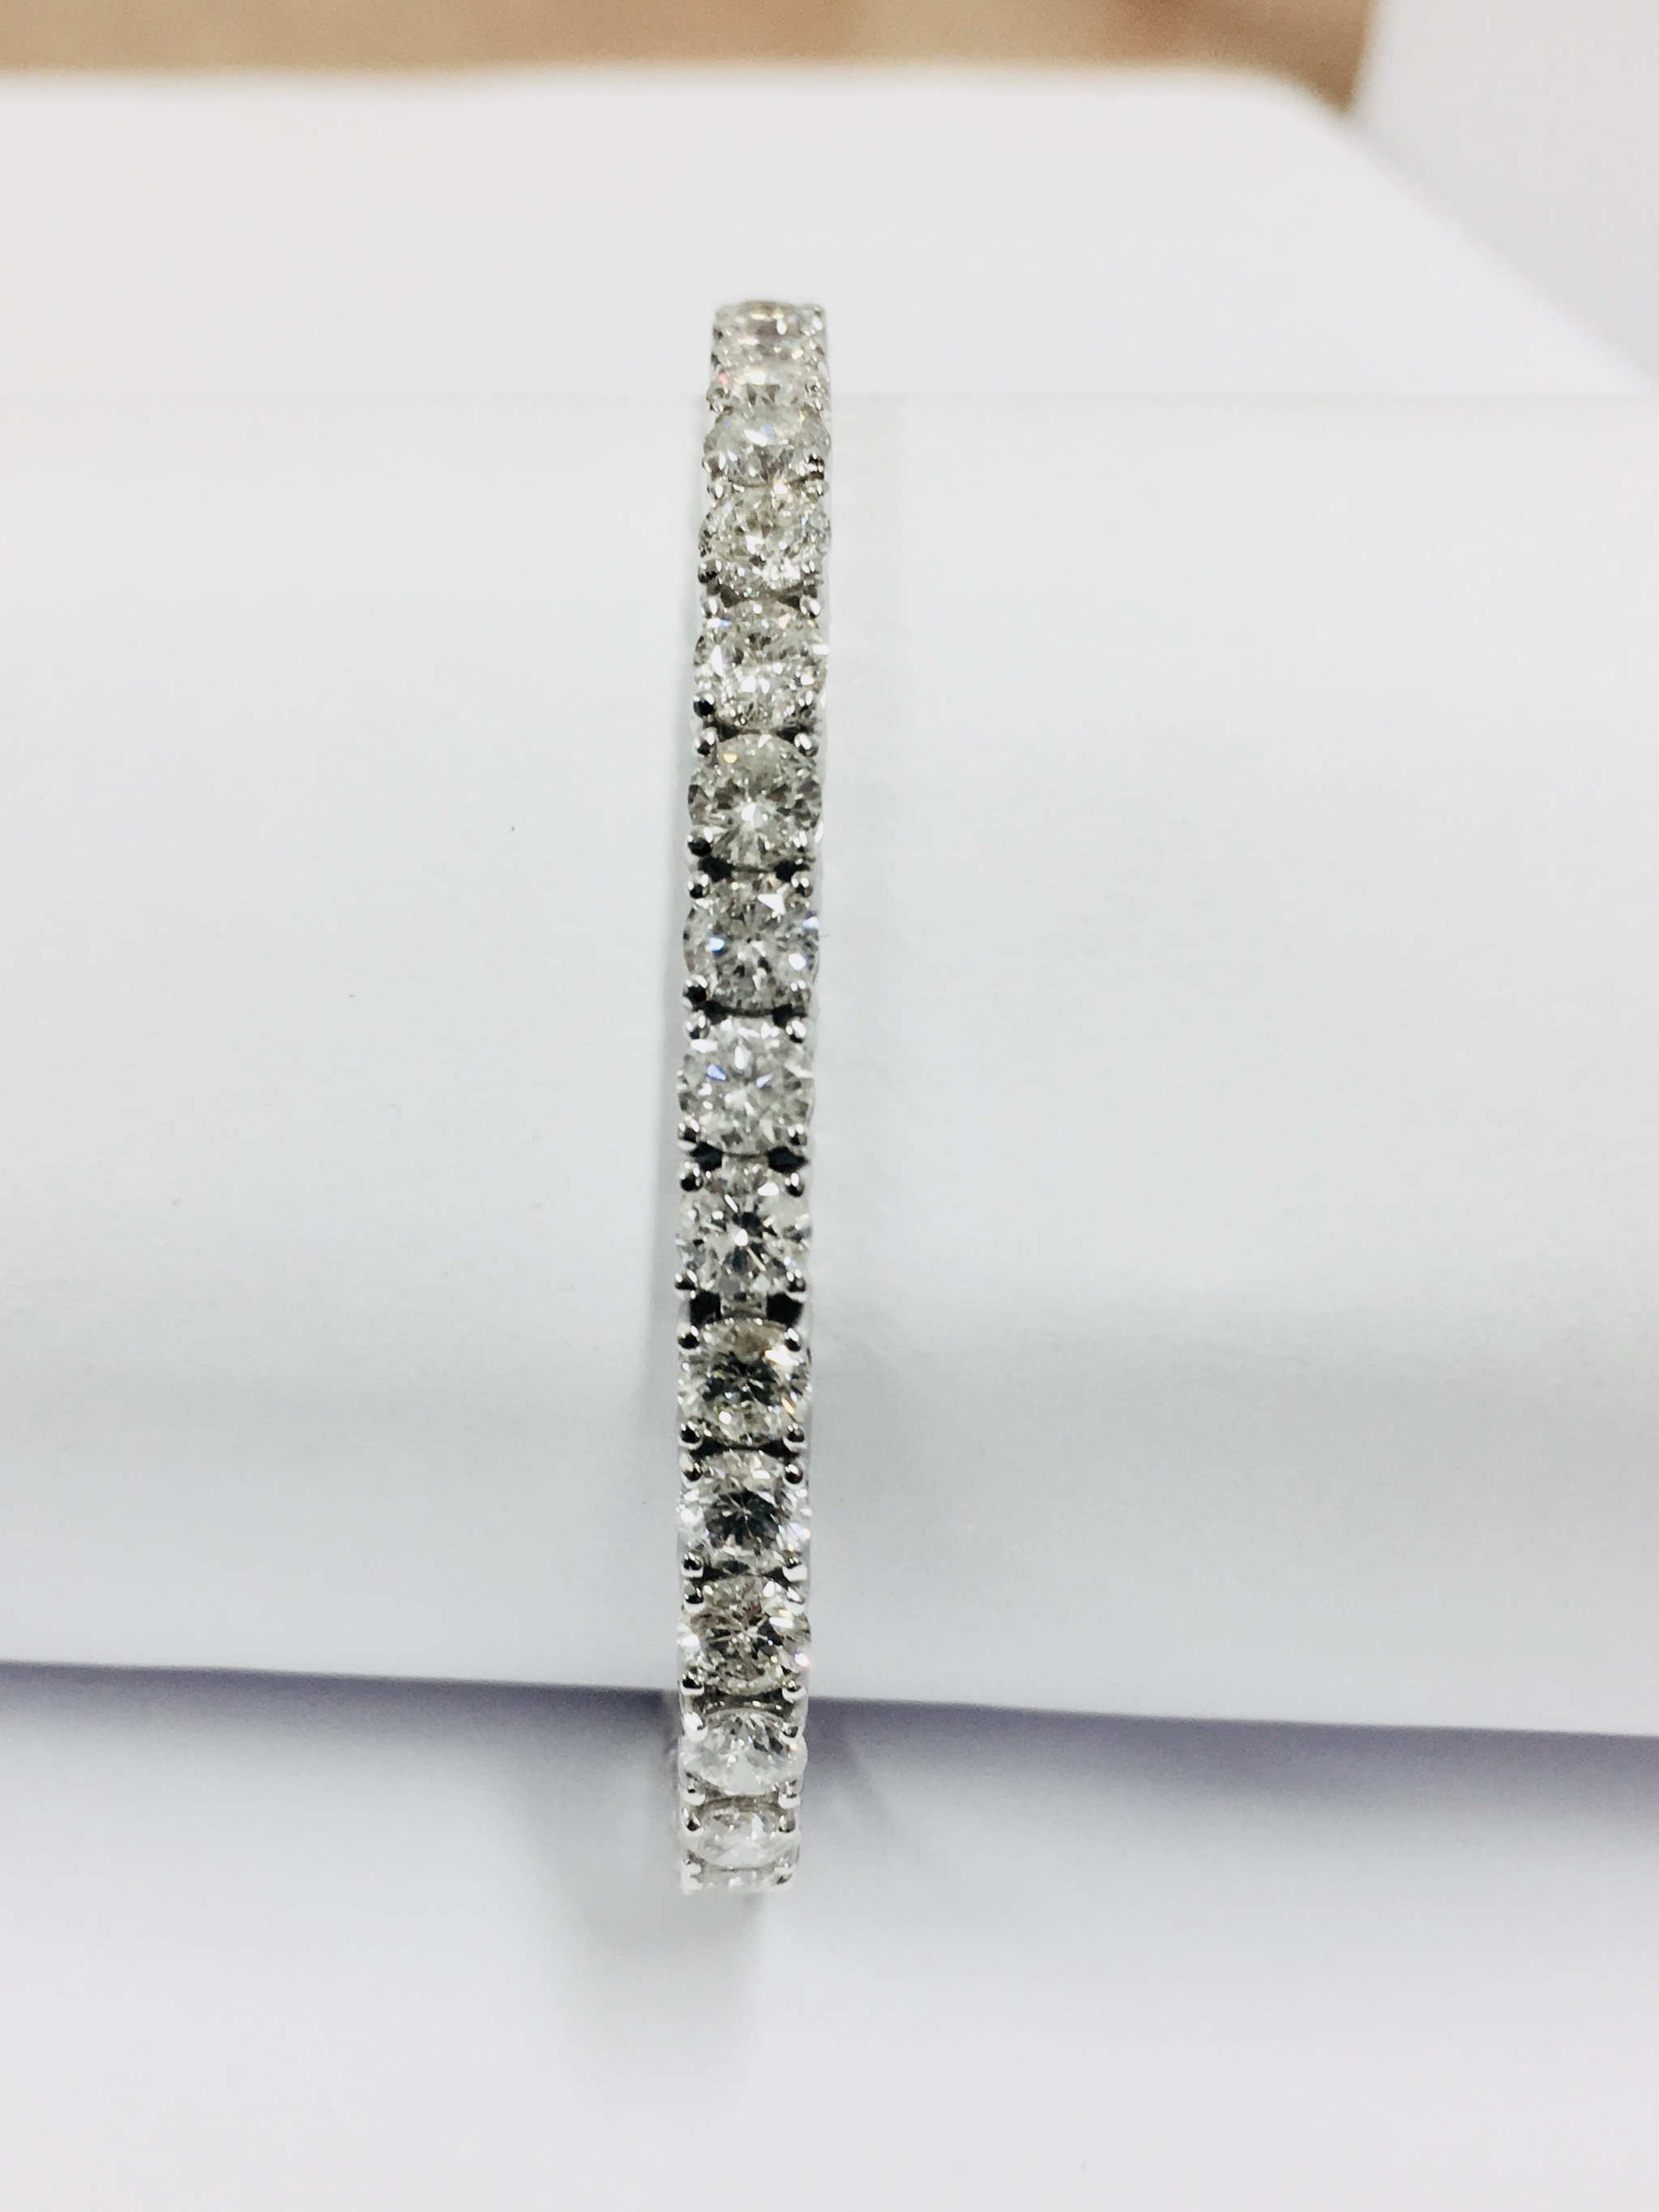 8.00ct Diamond tennis bracelet set with brilliant cut diamonds of G colour - Image 9 of 42